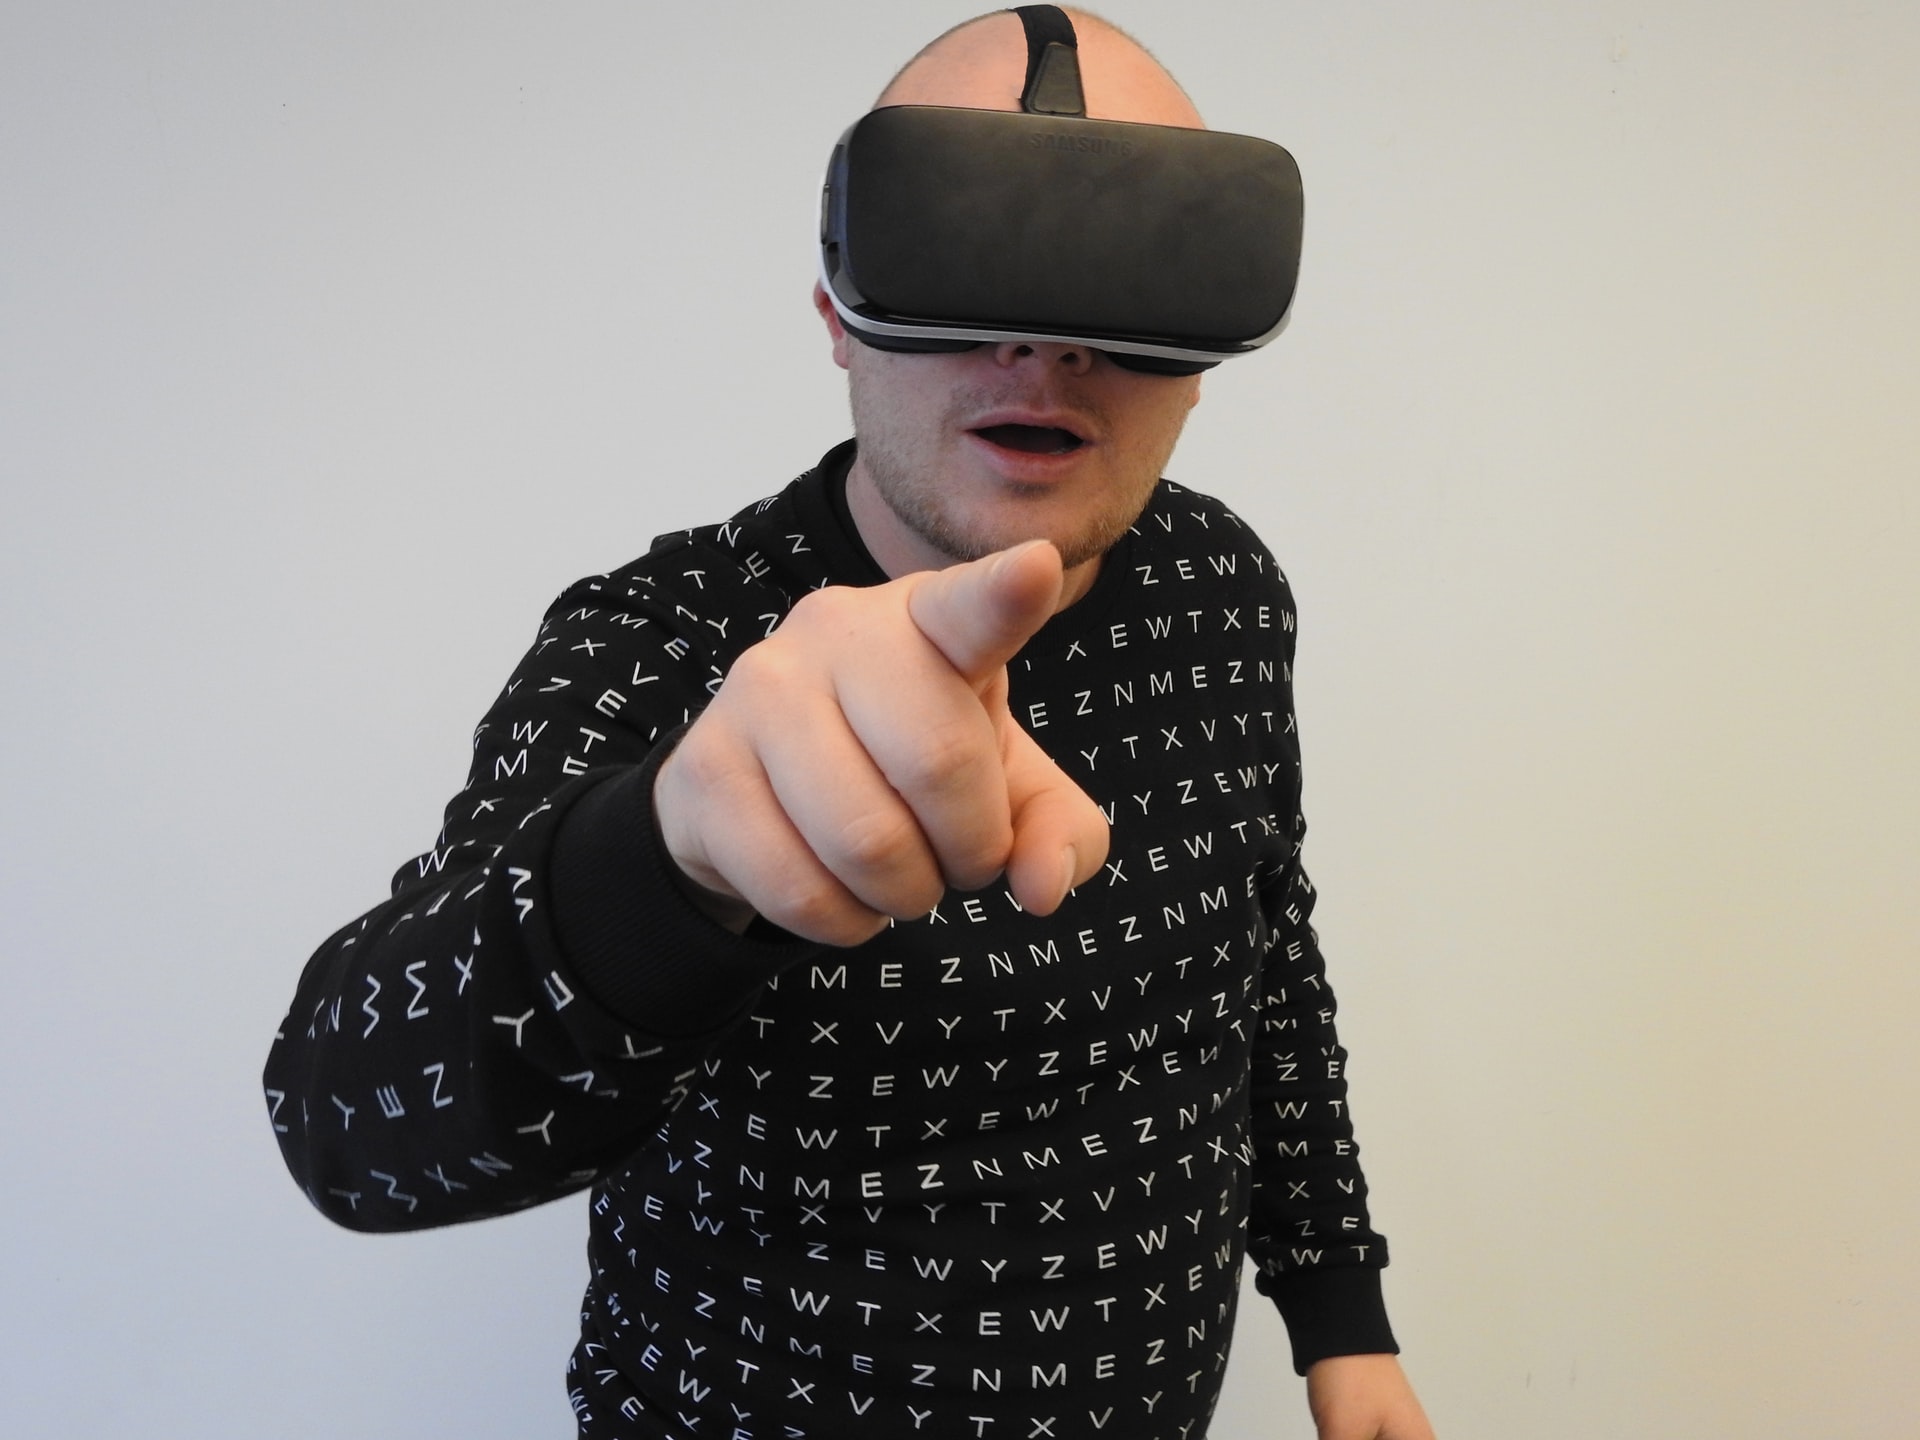 Man in VR headset. Photo by @hammerandtusk via Unsplash